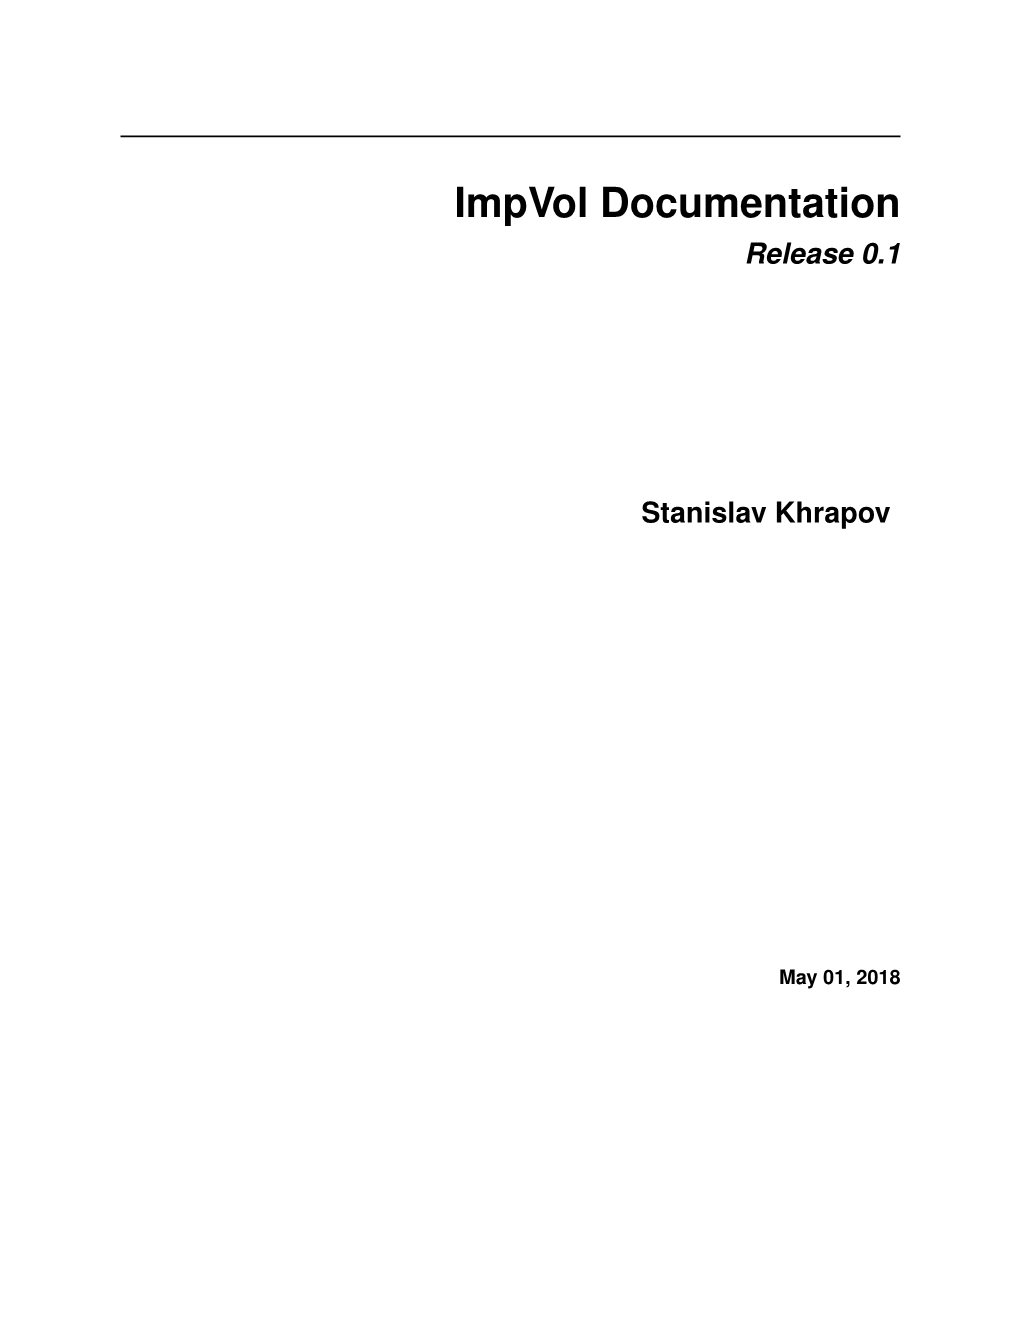 Impvol Documentation Release 0.1